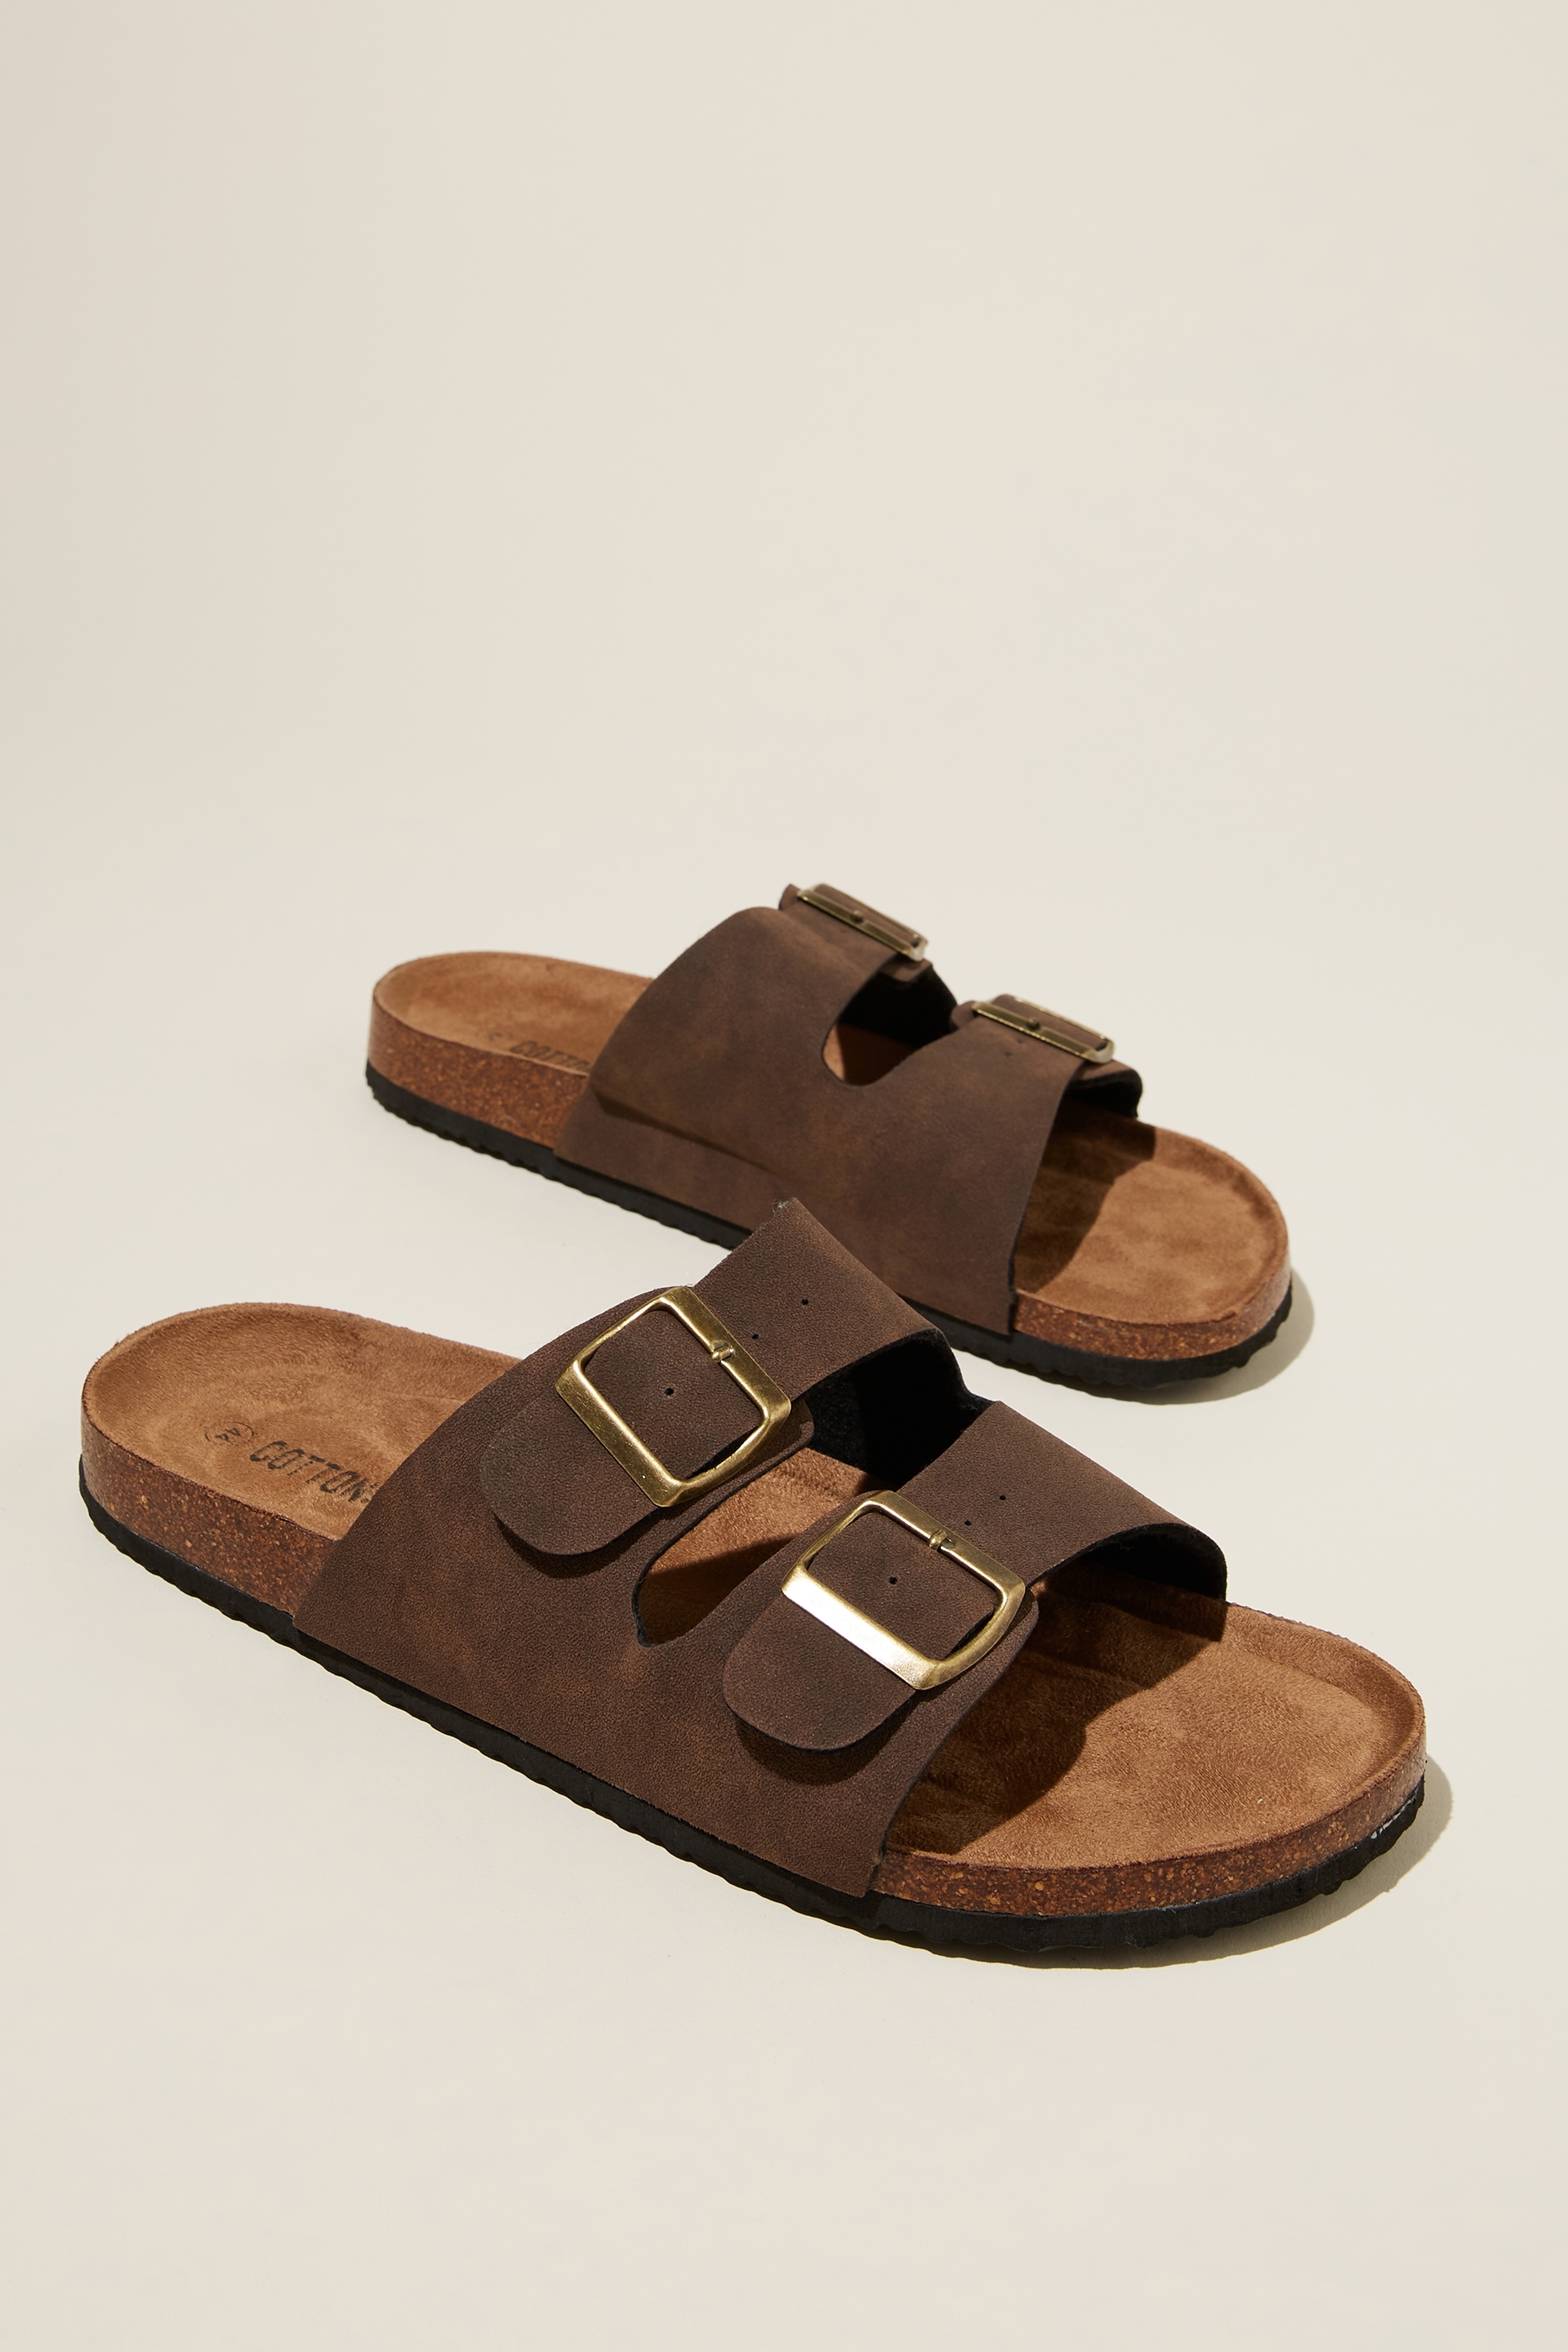 Rubi Women's White Outdoor Sandals-6.5 UK (40 EU) (9 US) (424050-04-40) :  Amazon.in: Shoes & Handbags